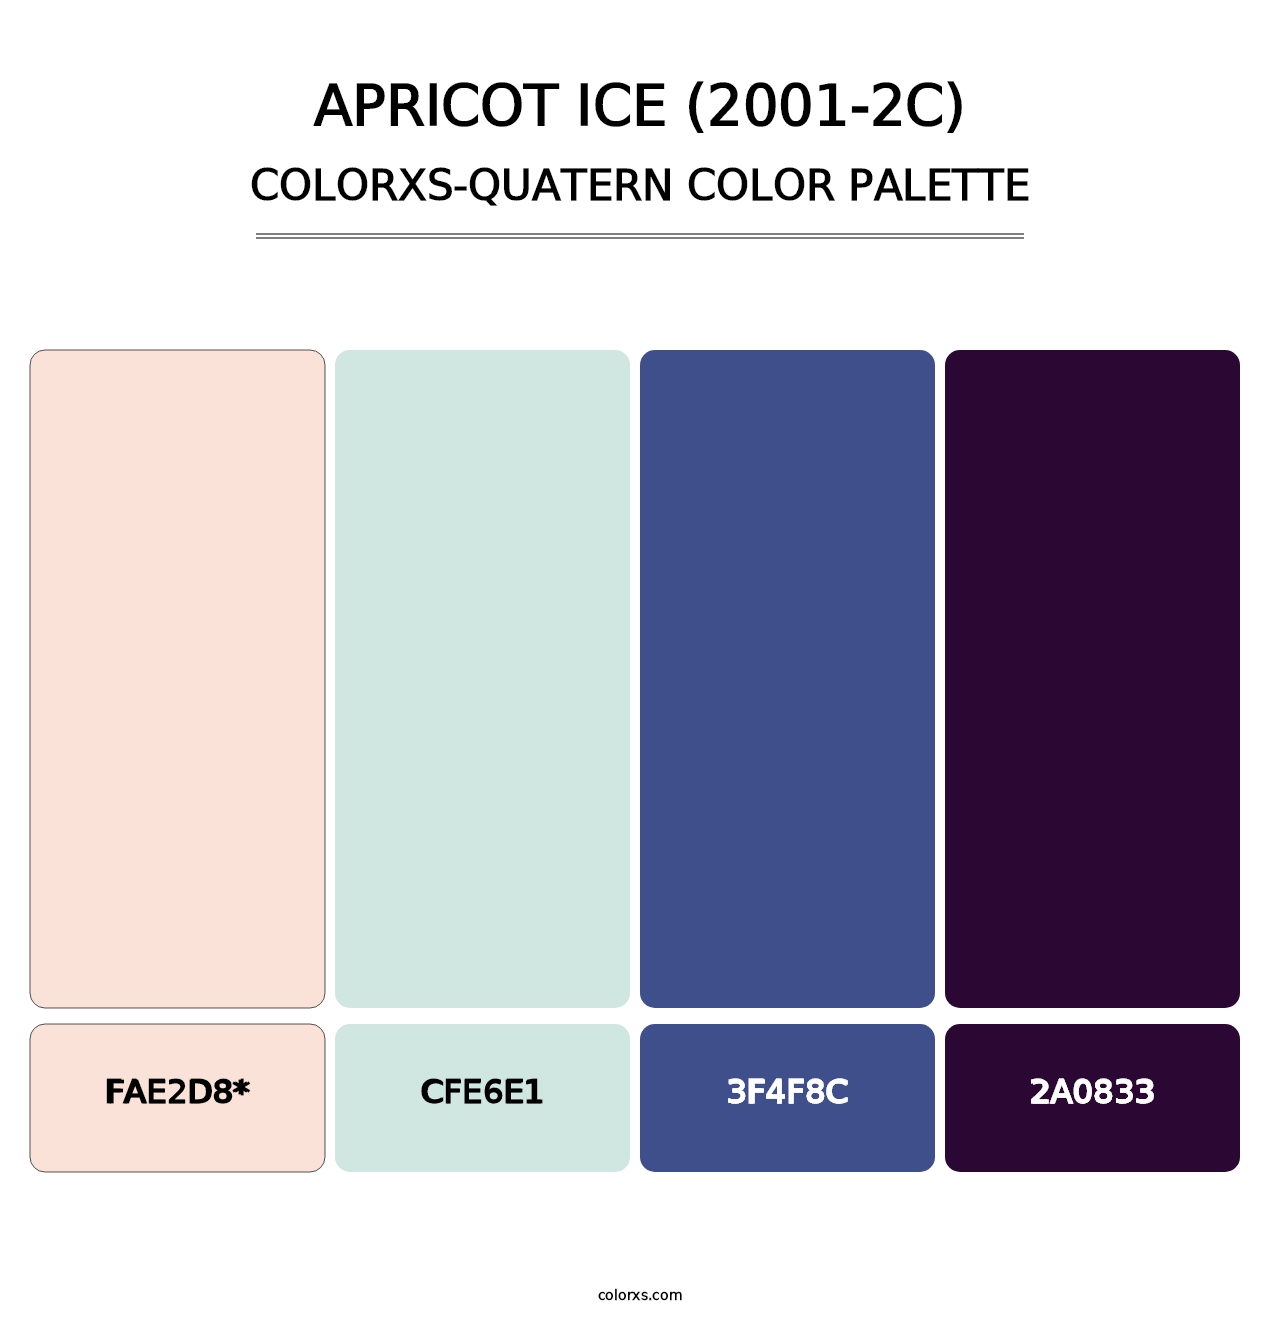 Apricot Ice (2001-2C) - Colorxs Quatern Palette